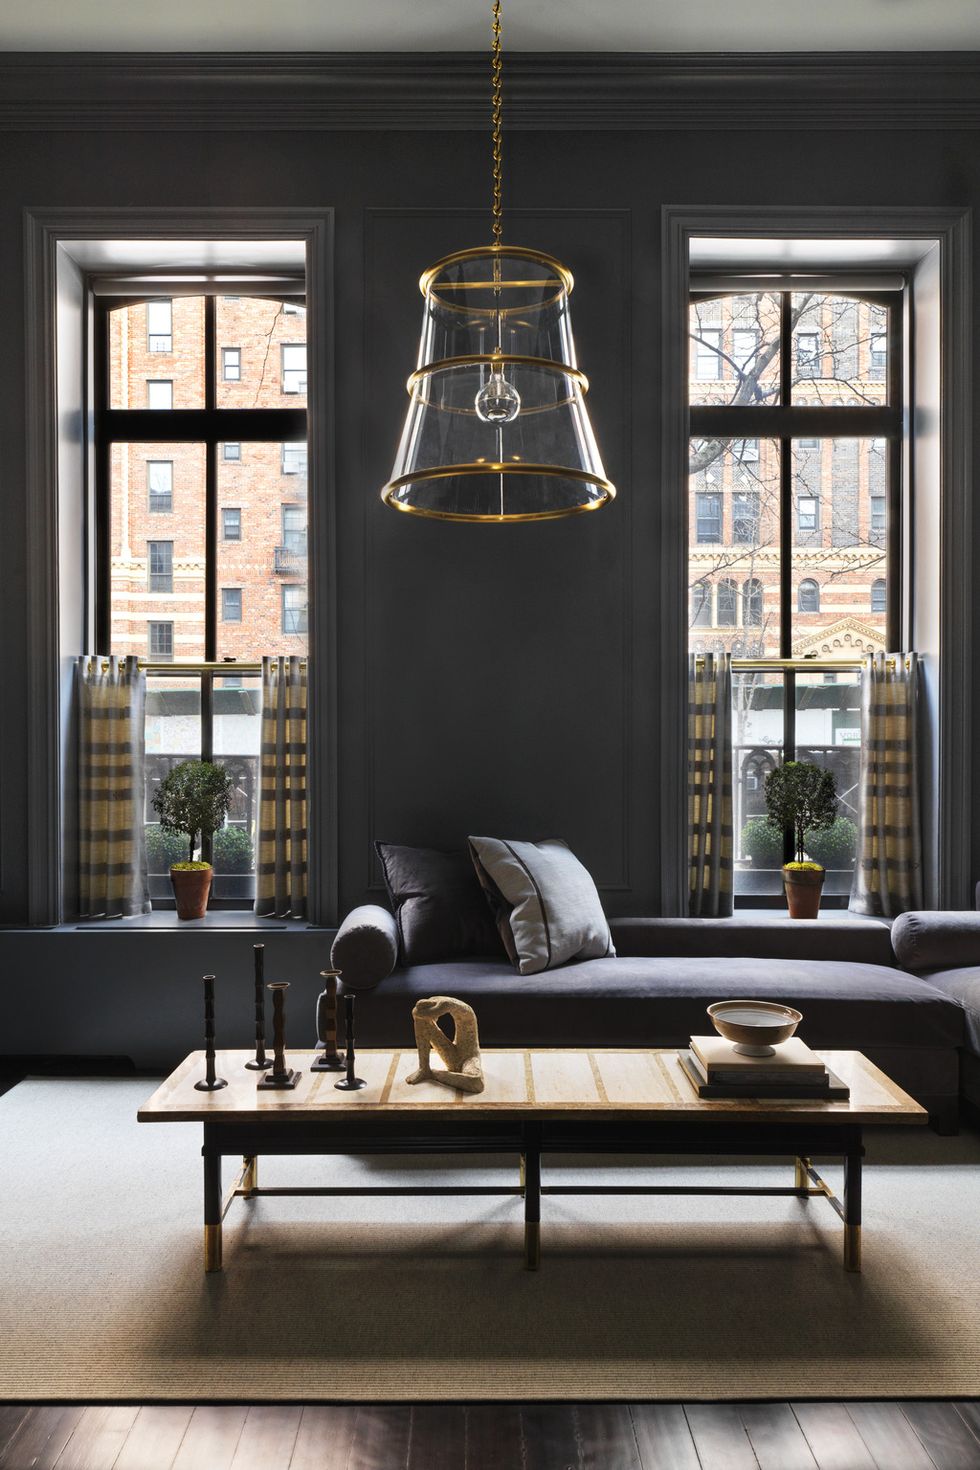 Dark Academia Furniture and Whimsigoth Decor — FOUND by Bashford Design